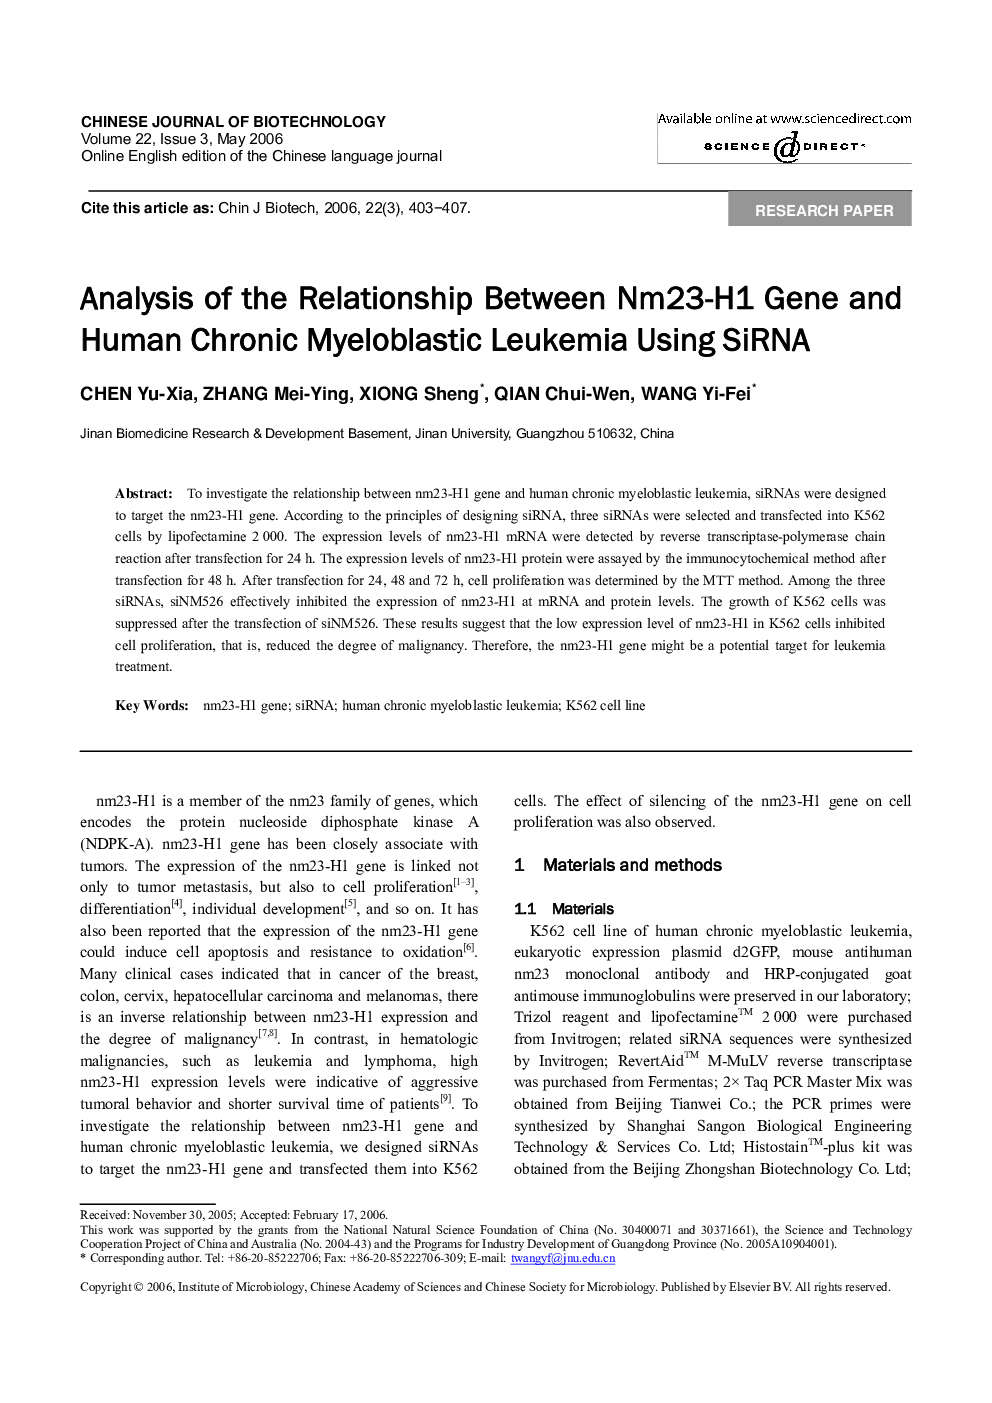 Analysis of the Relationship Between Nm23-H1 Gene and Human Chronic Myeloblastic Leukemia Using SiRNA